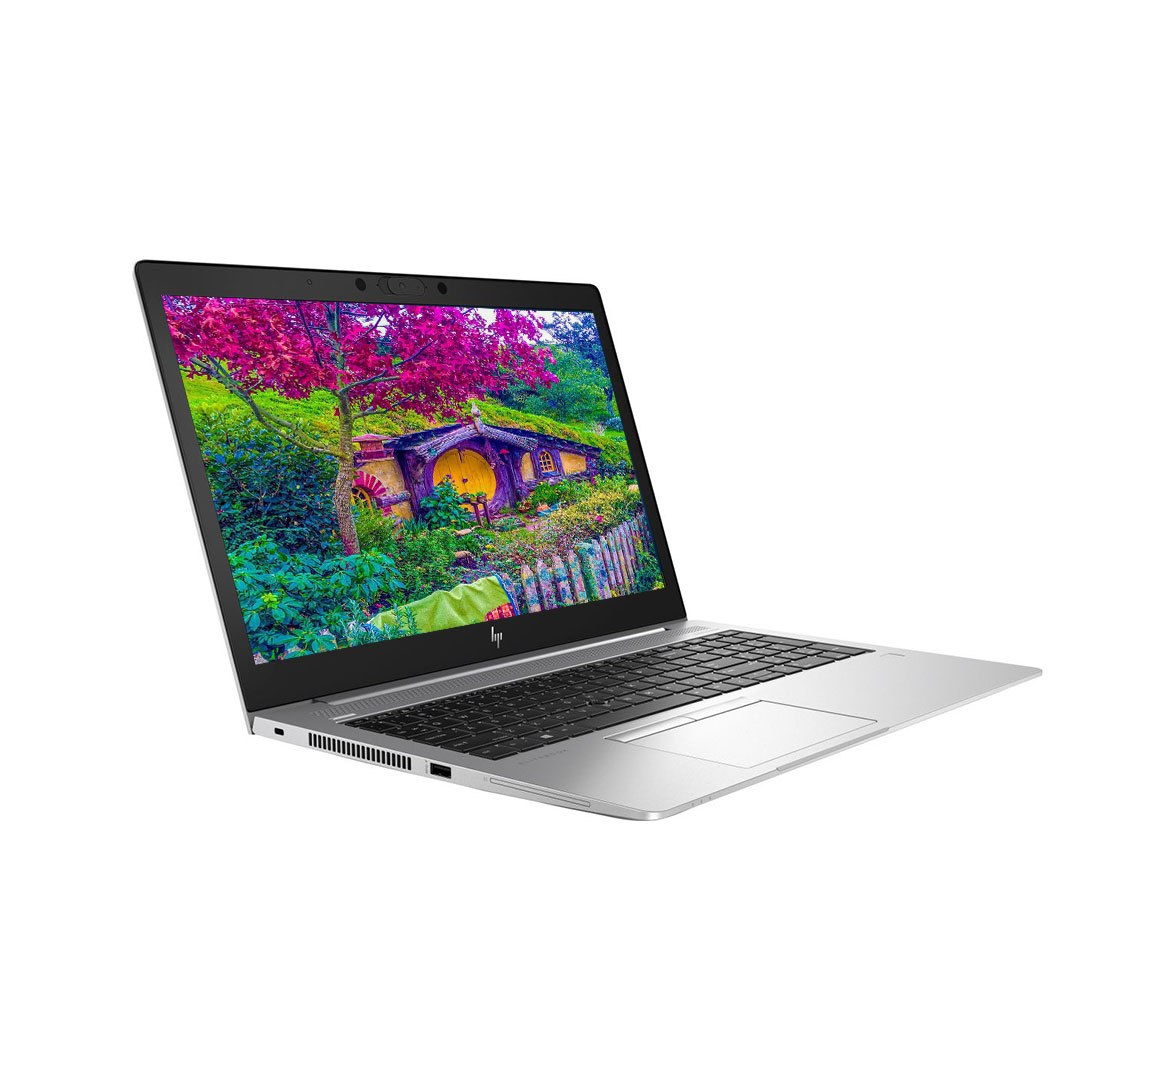 HP EliteBook 850 G6 Business Laptop, Intel Core i5-8th Gen. CPU, 16GB RAM, 256GB SSD, 15 inch Display, Windows 10 Pro